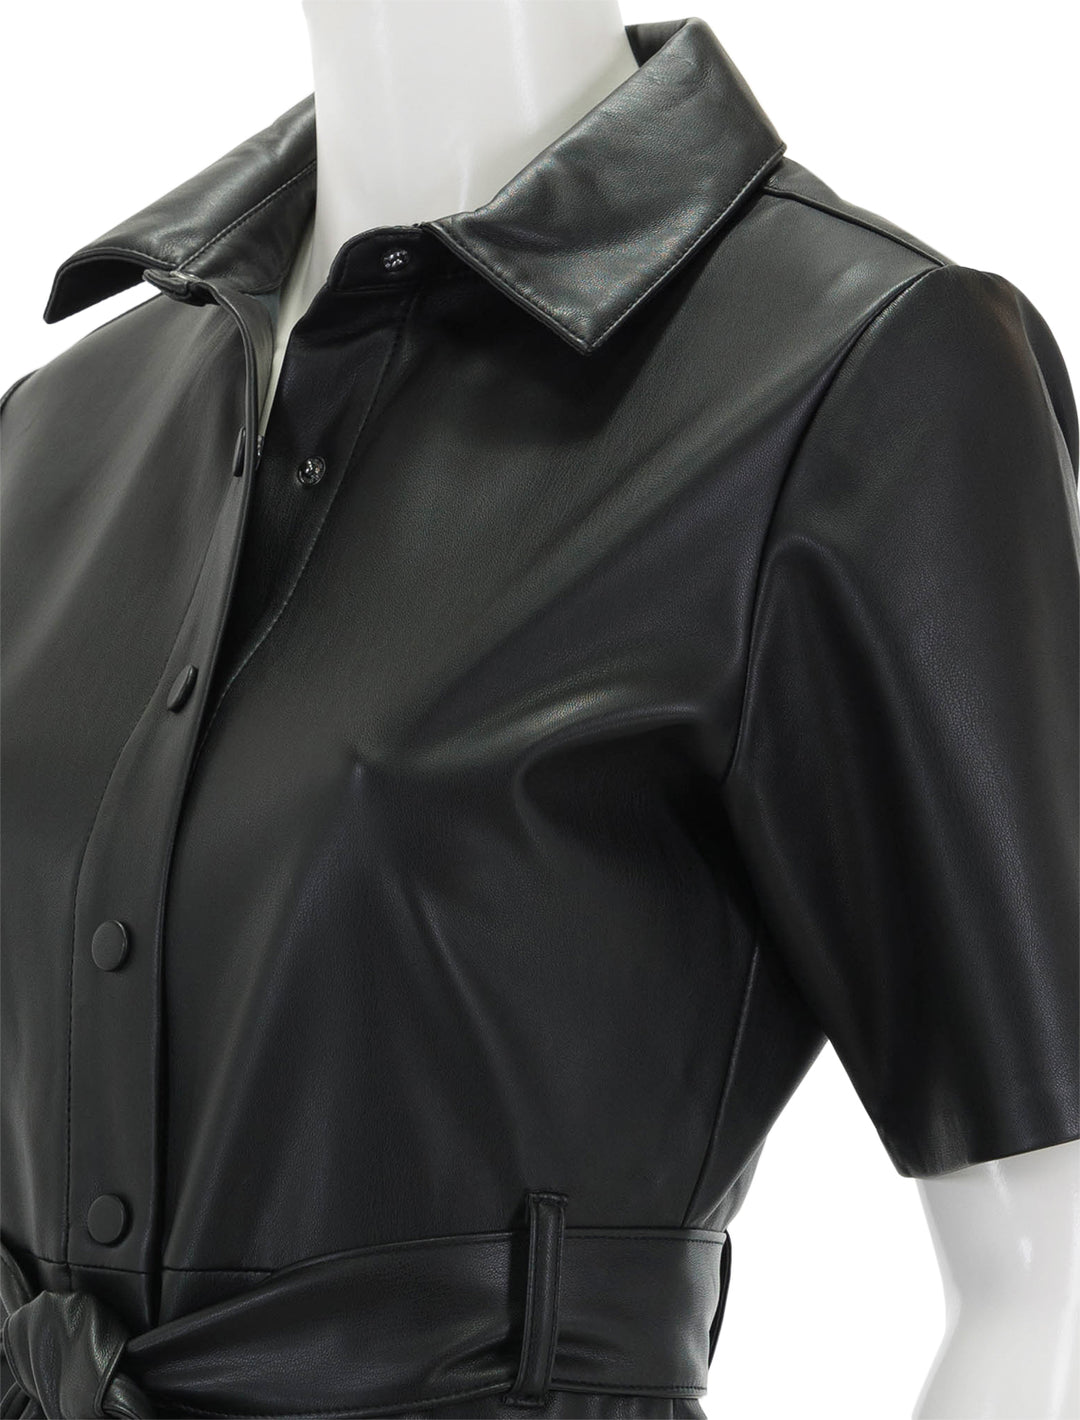 Close-up view of Steve Madden's jolene dress in black.